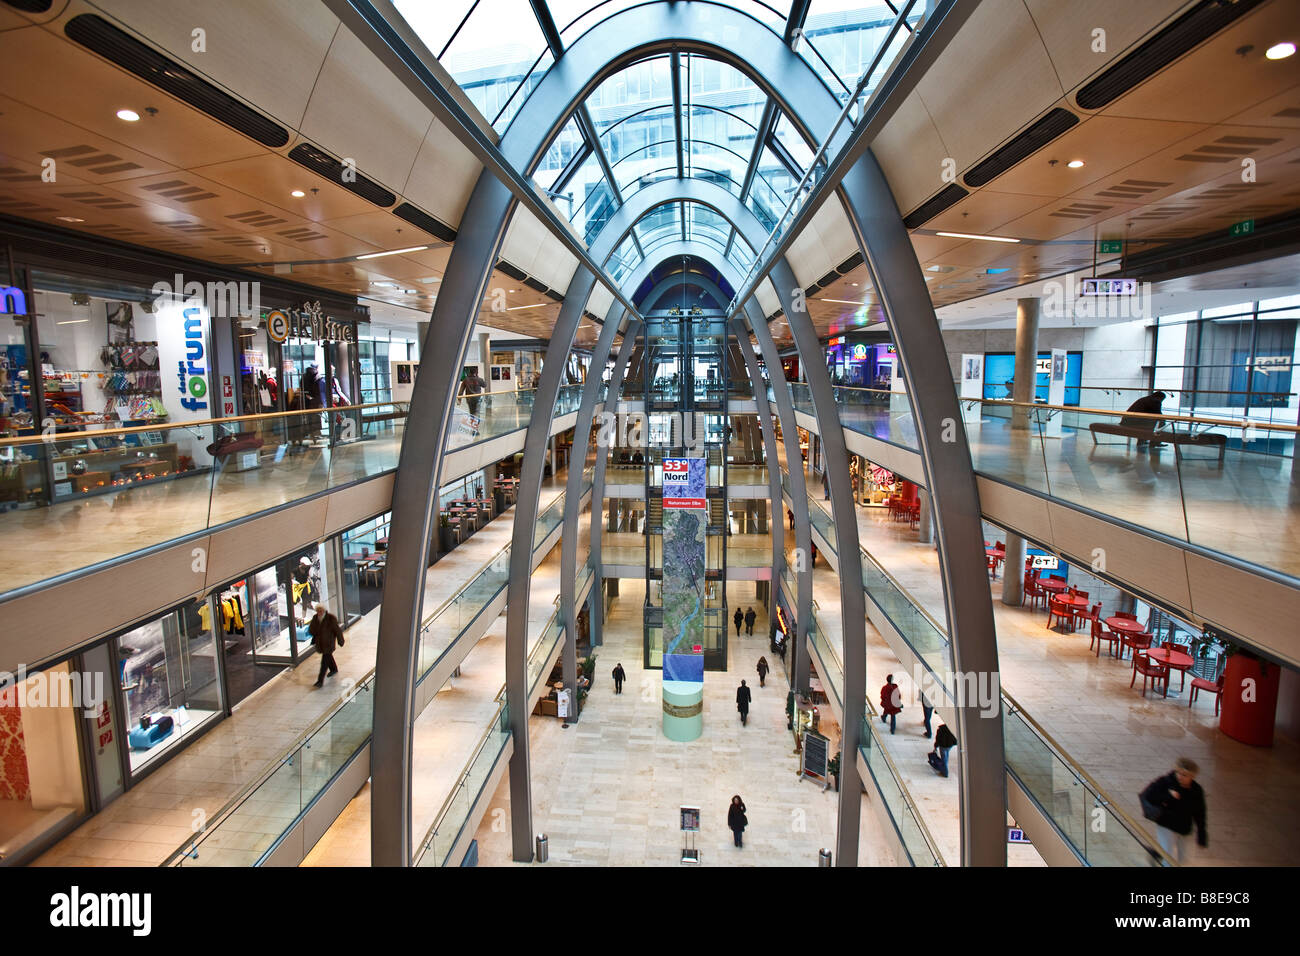 Europa Passage shopping center in Hamburg, Germany Stock Photo